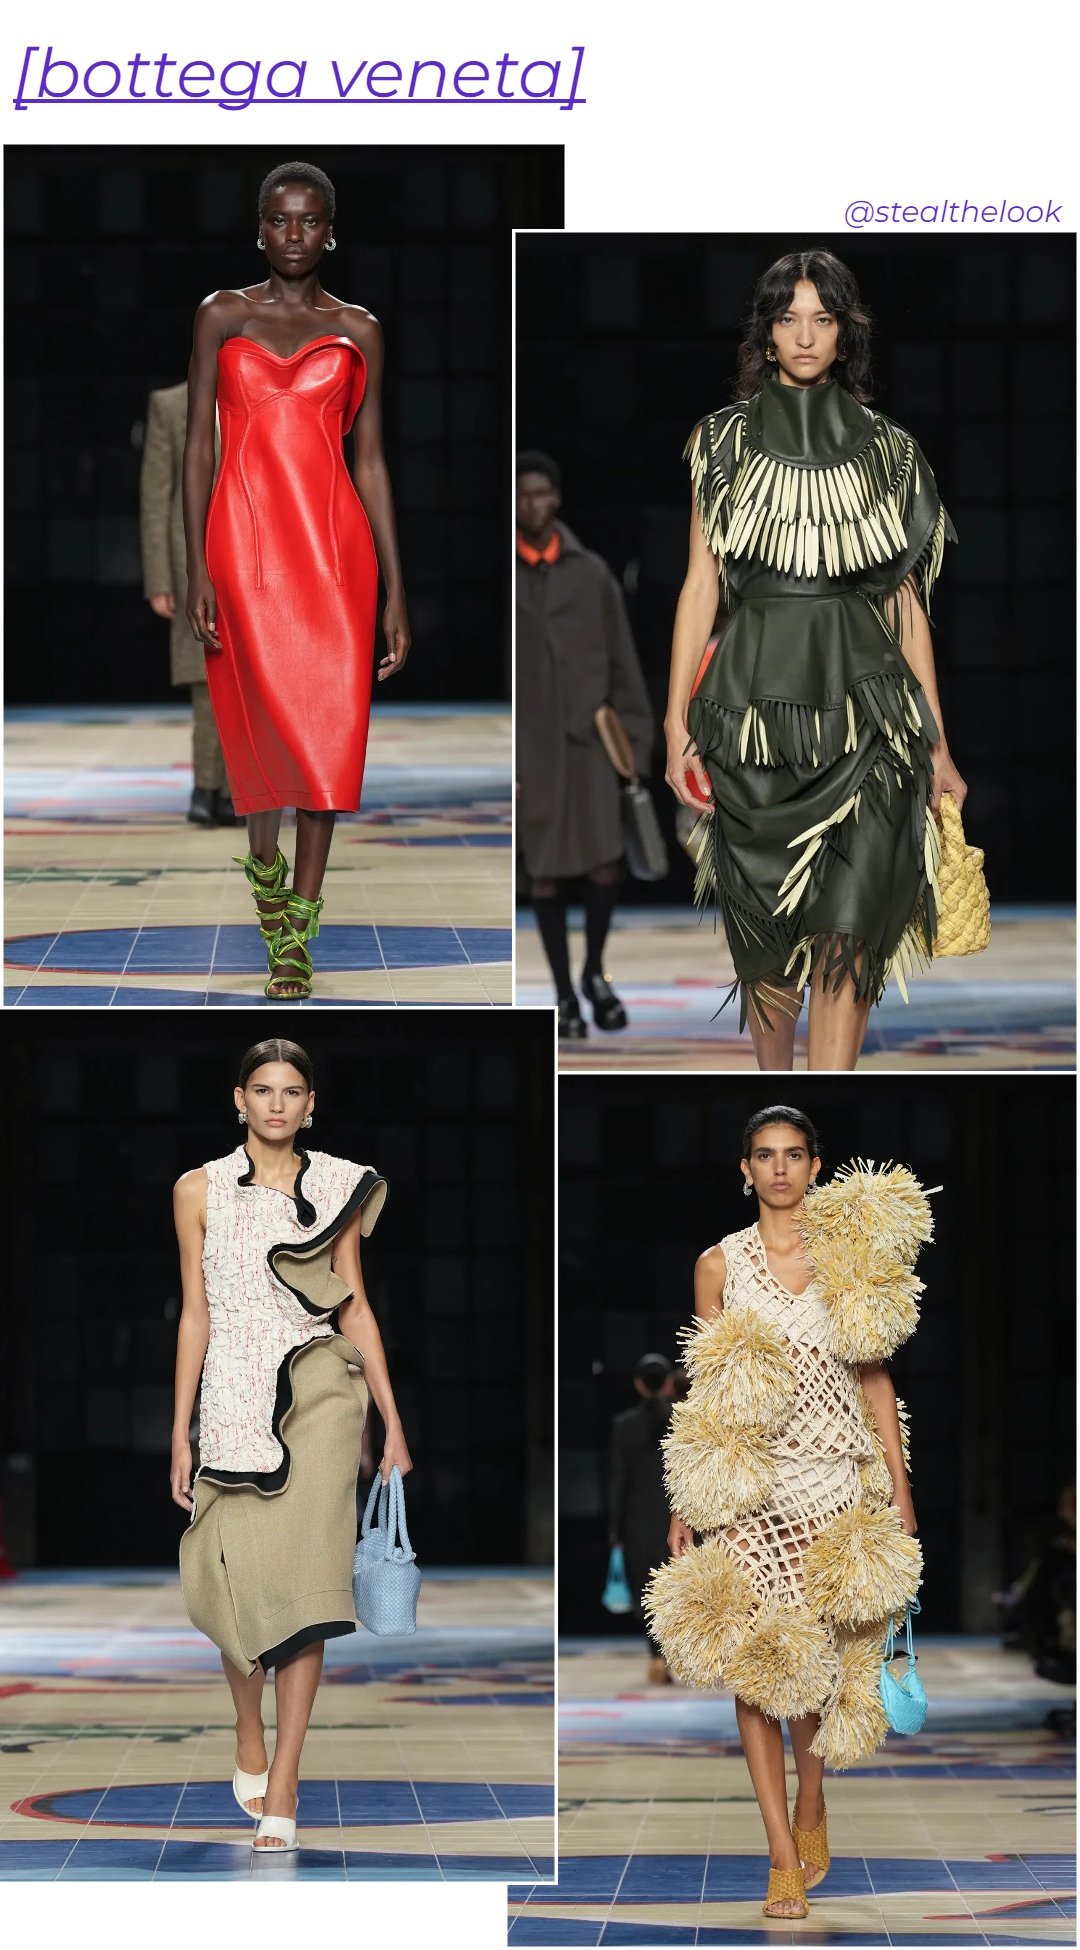 Bottega Veneta - roupas diversas - Milano Fashion Week - primavera - colagem de imagens - https://stealthelook.com.br